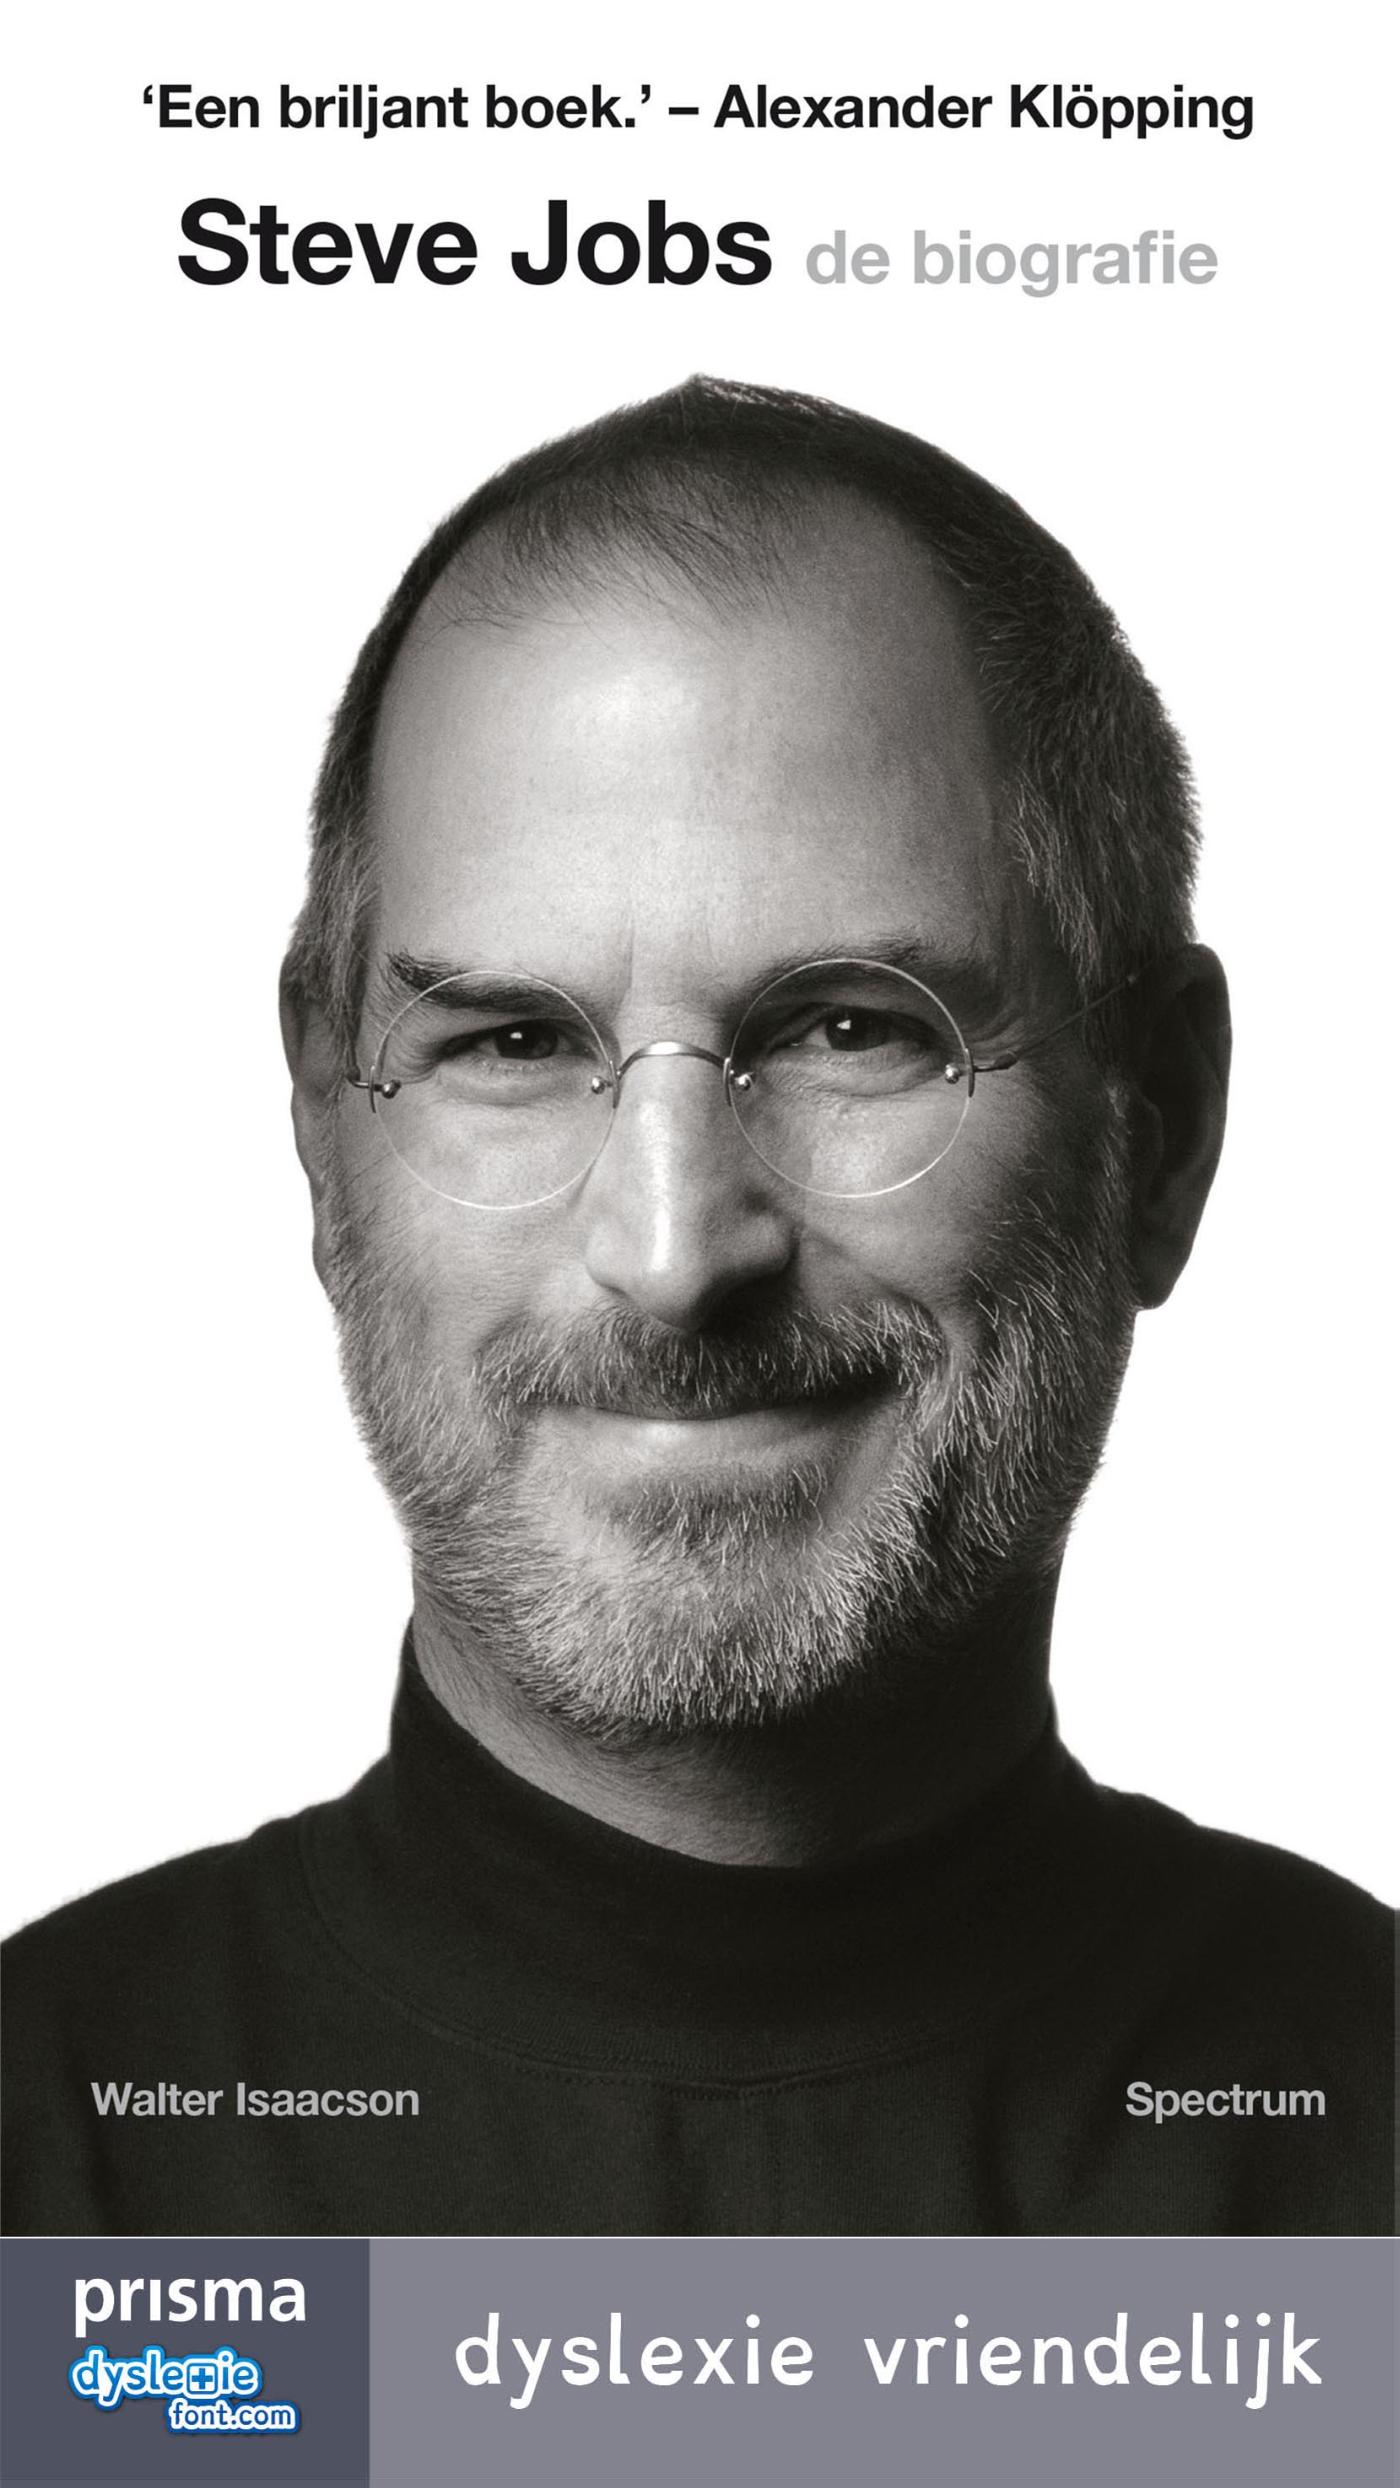 Steve Jobs de biografie (Ebook)